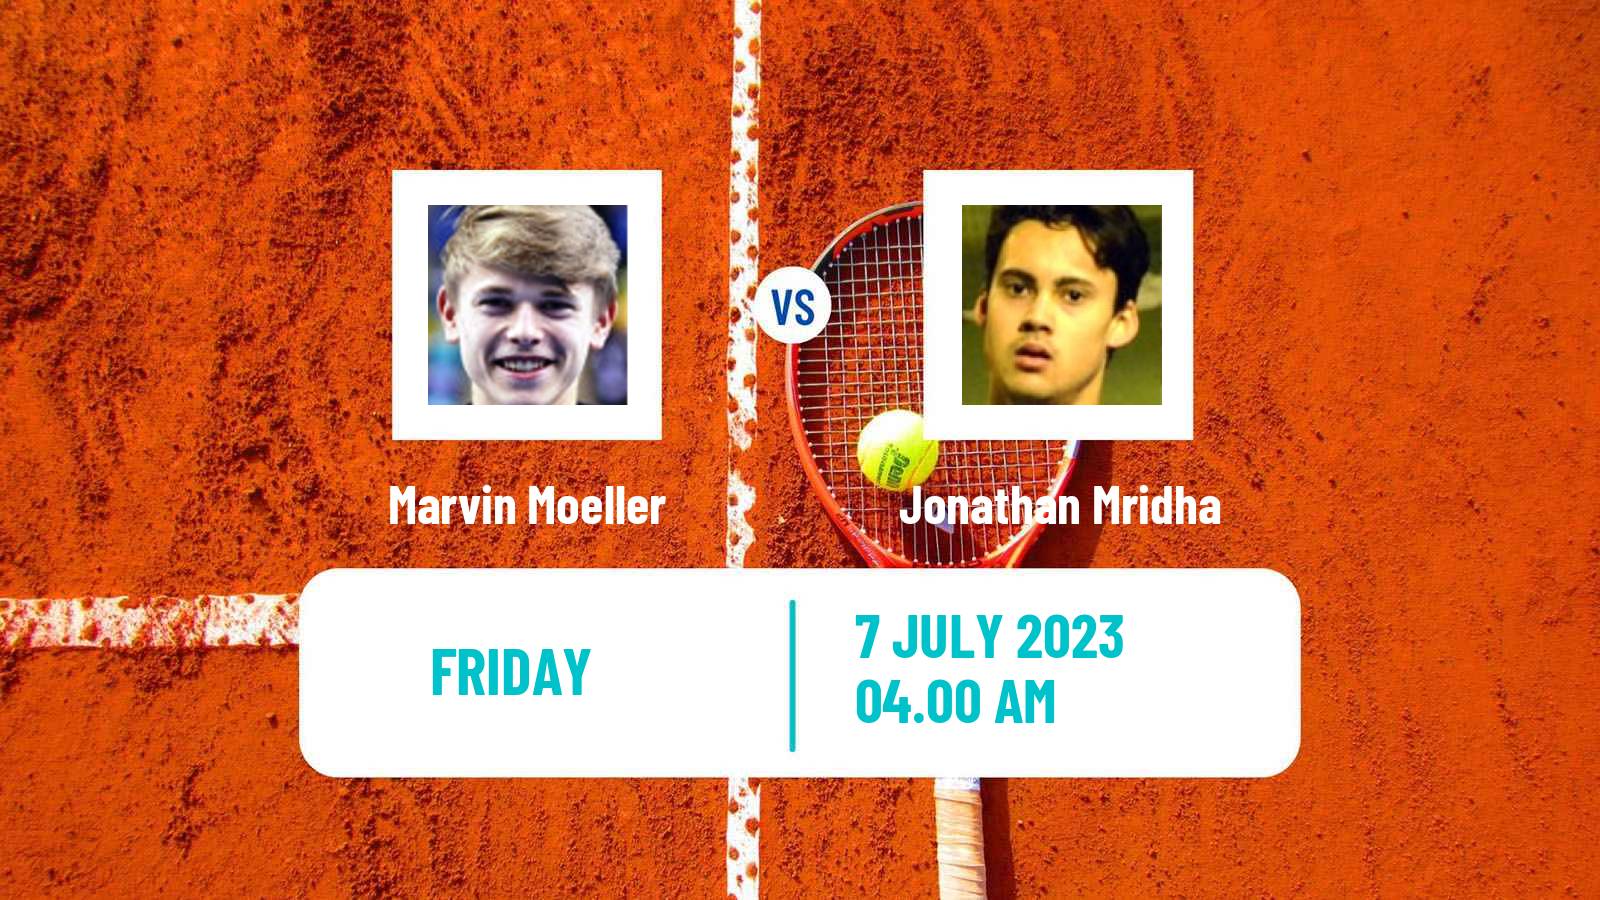 Tennis ITF M15 Sofia Men Marvin Moeller - Jonathan Mridha